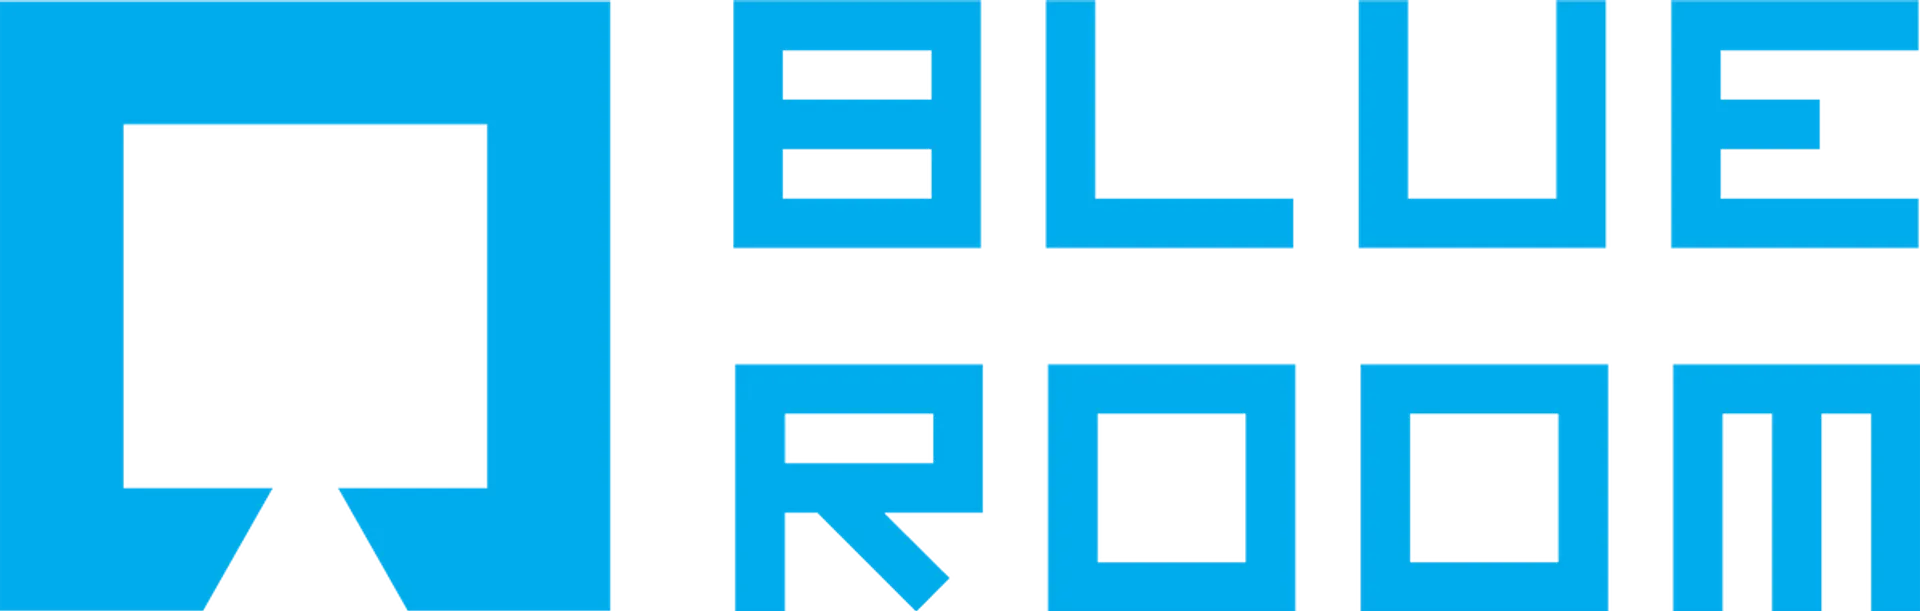 BLUE ROOM logo